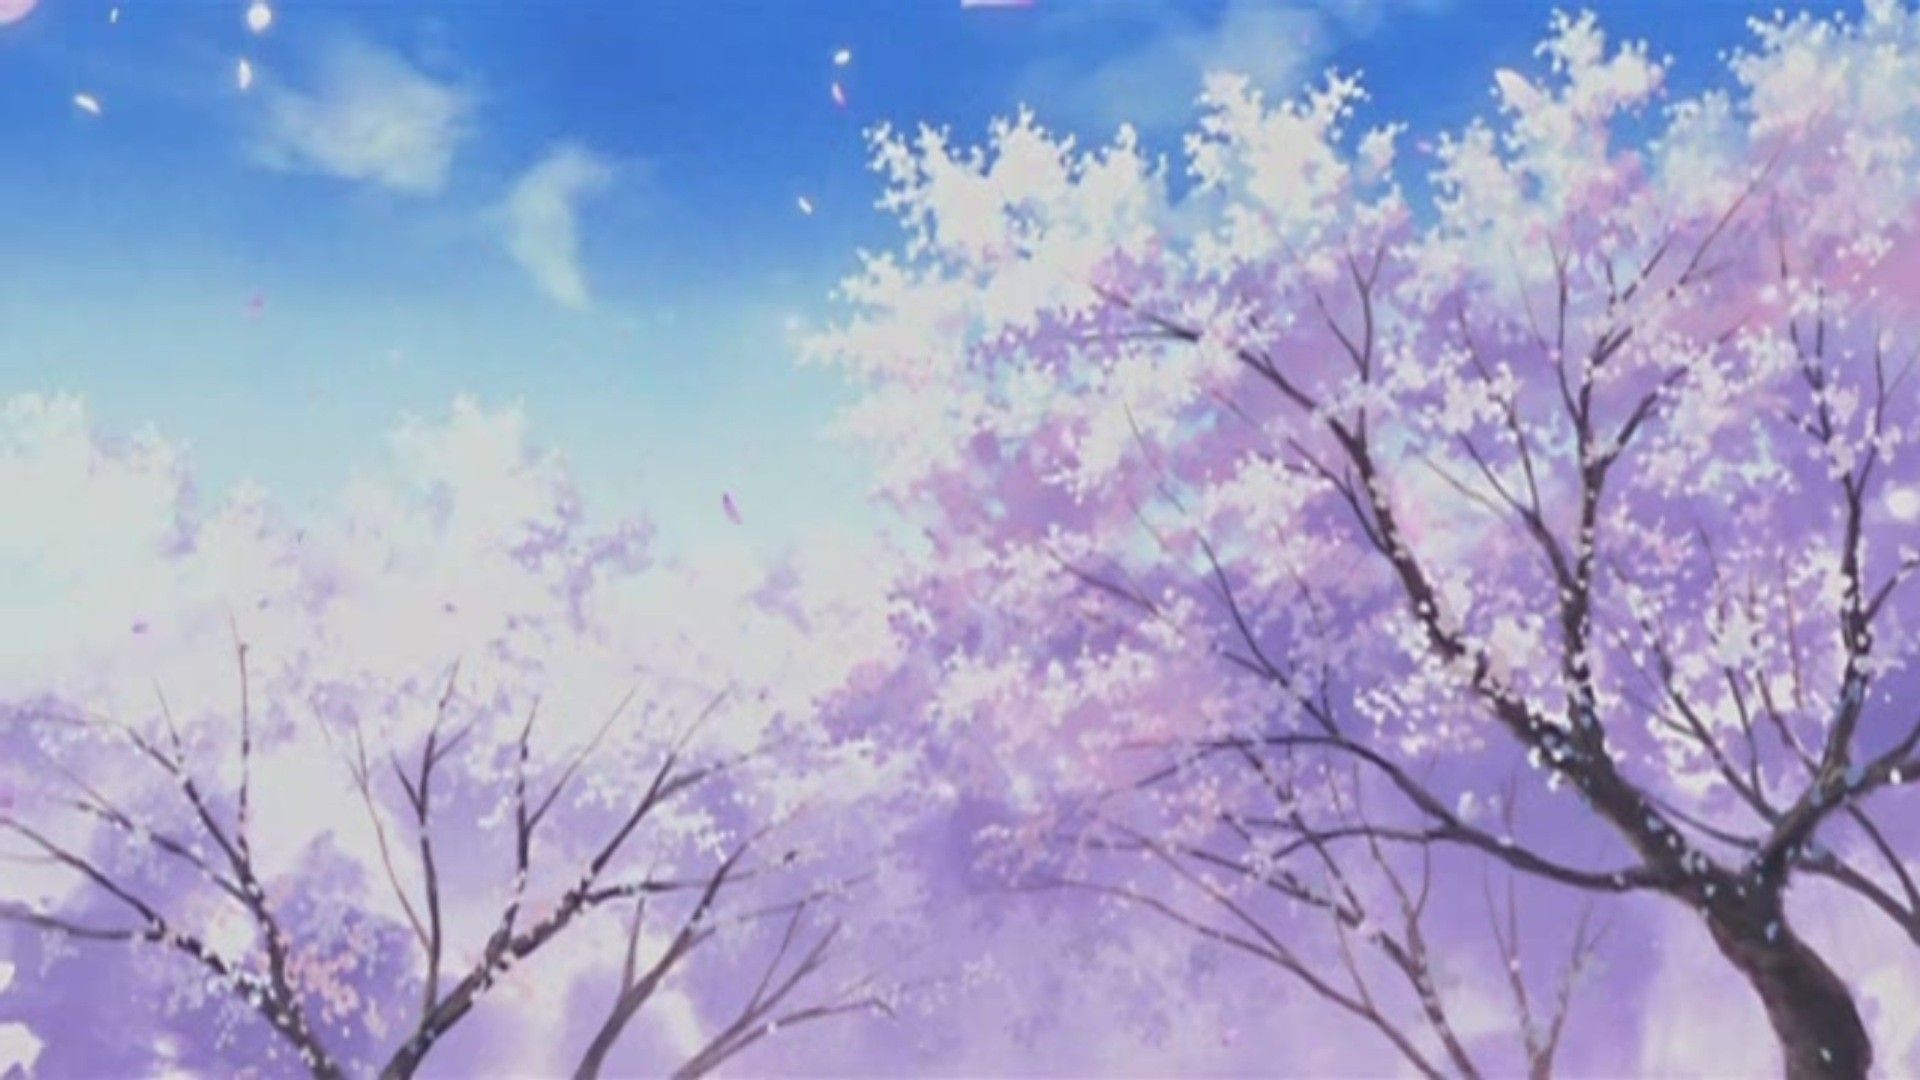 Anime scenery wallpaper desktop background anime scenery wallpaper desktop background 1920x1080 voltagebd Choice Image - Anime landscape